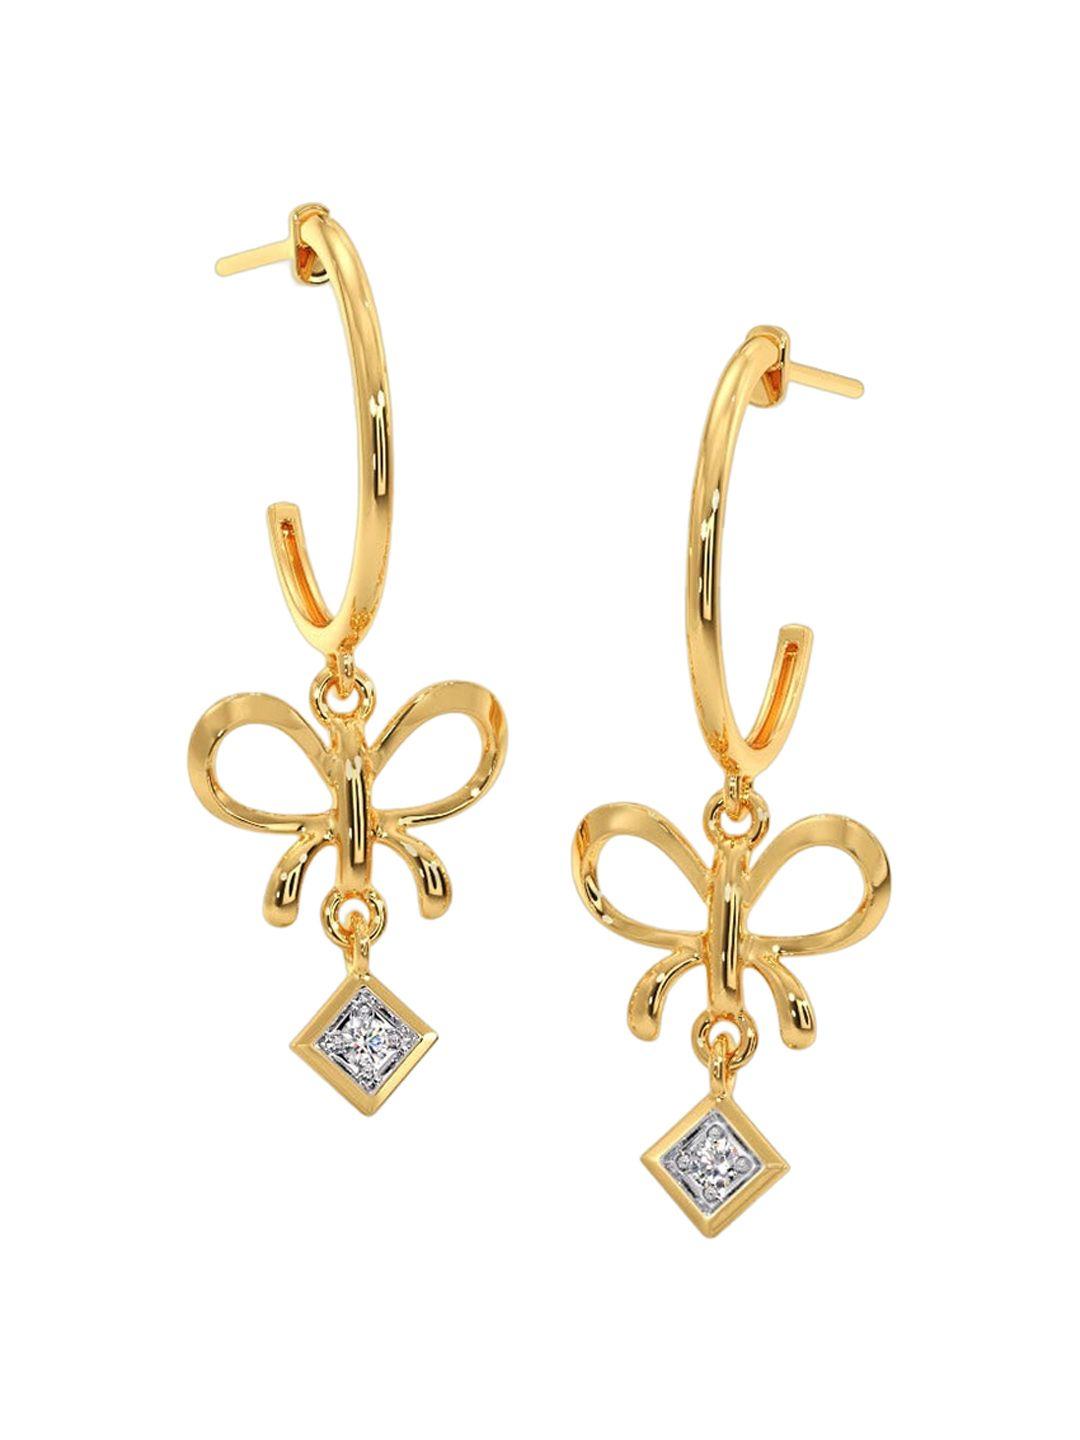 candere a kalyan jewellers company 18kt gold diamond hoop earrings-1.2 gm